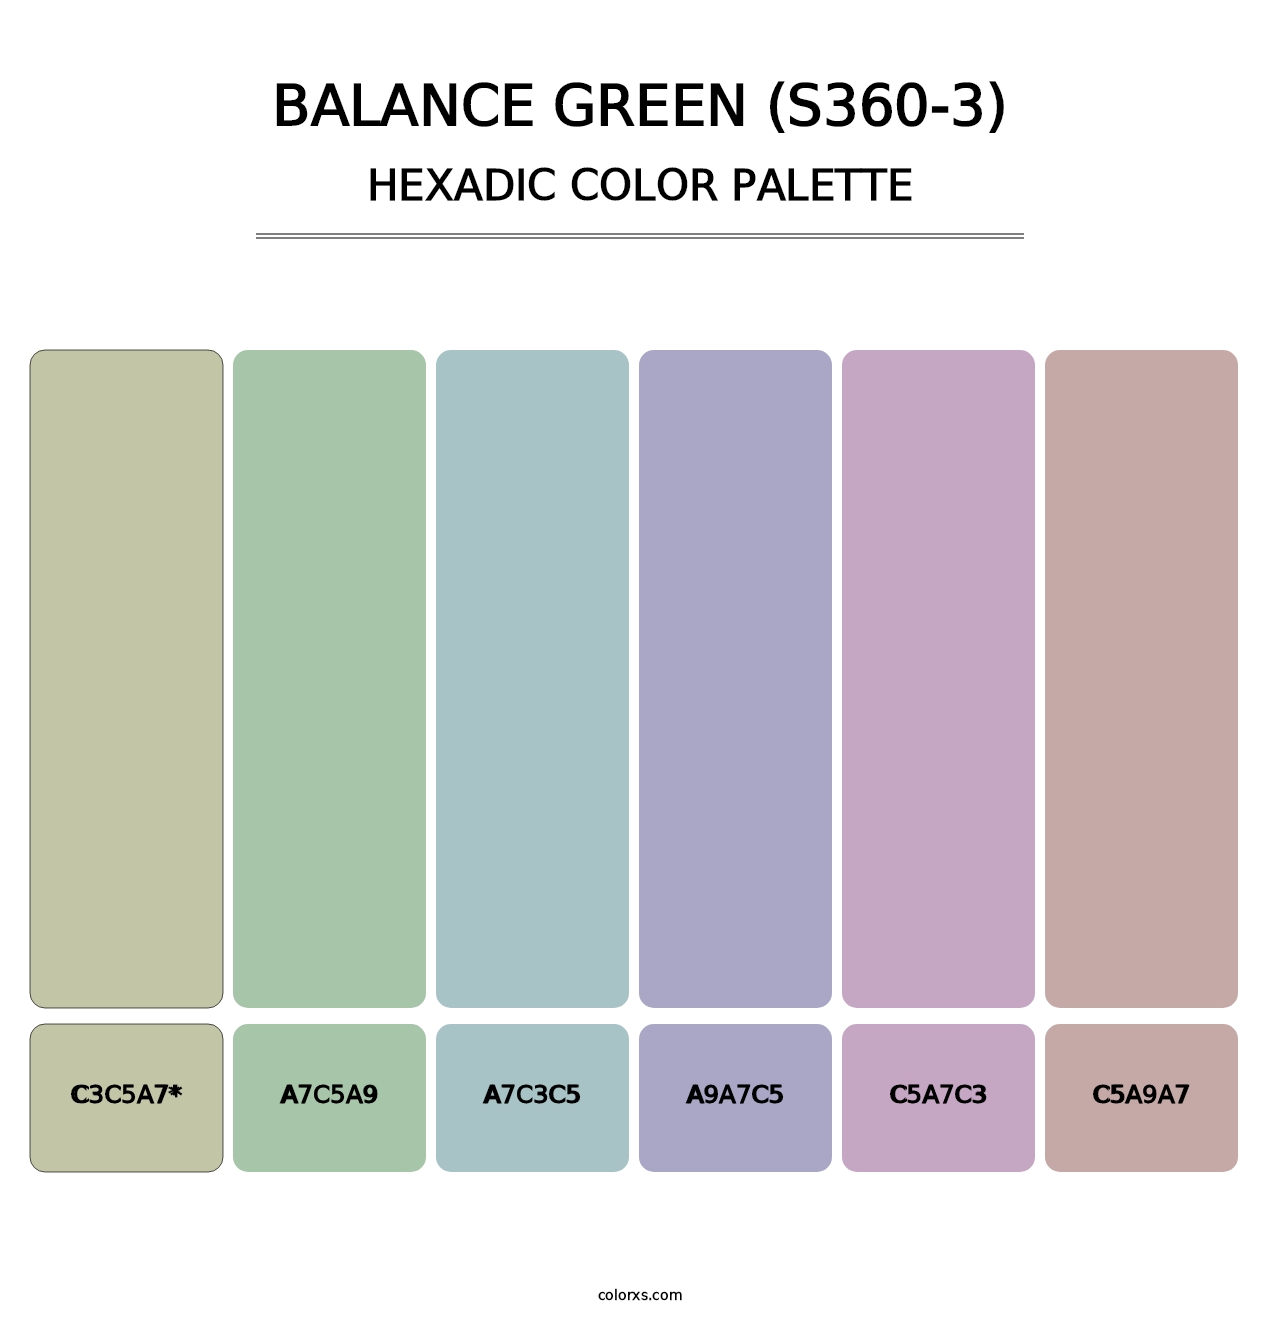 Balance Green (S360-3) - Hexadic Color Palette